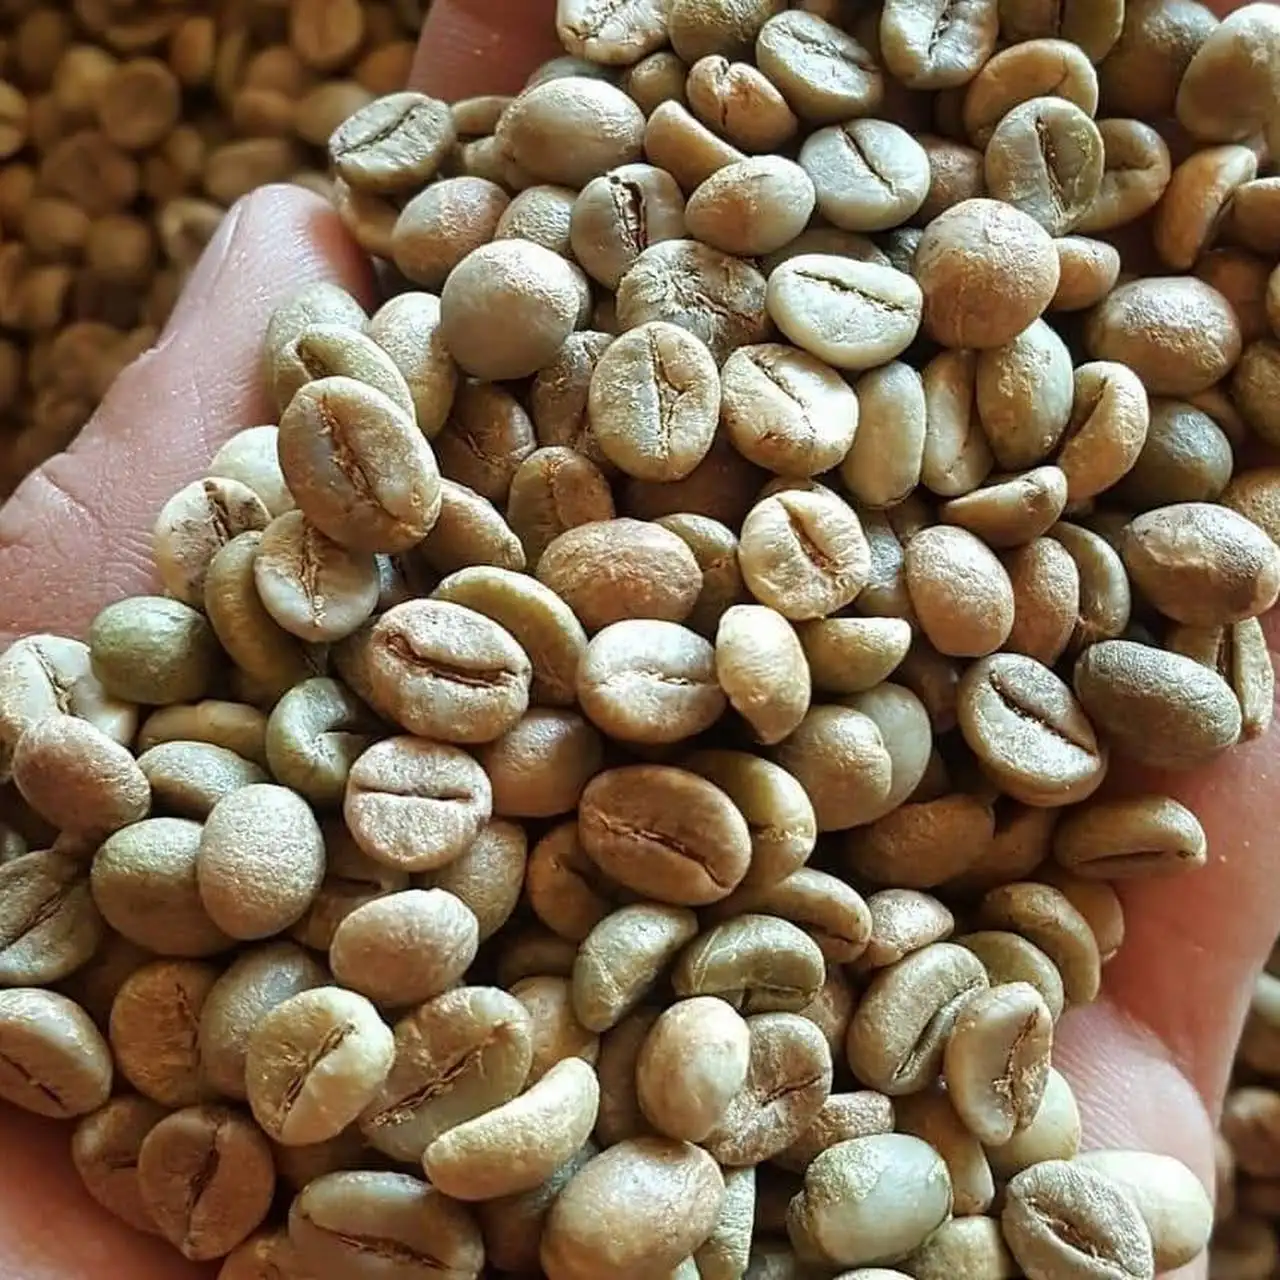 Wholesale Vietnam Robusta Green Coffee Beans In Bulk with Low Price / Best Robusta Green Coffee Beans / WhatsApp +84-902803631